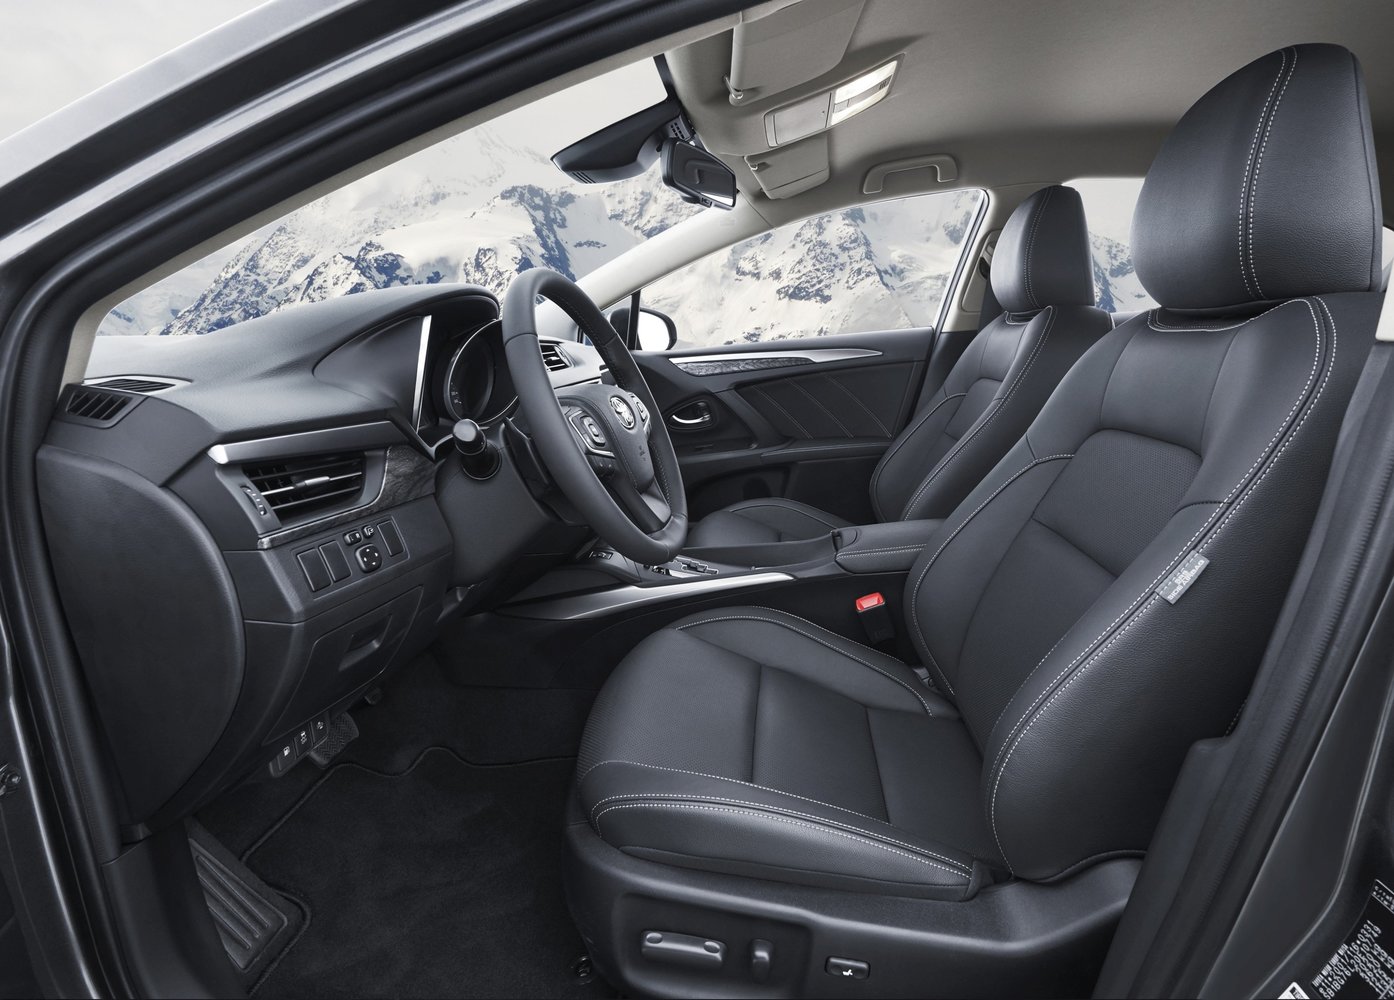 седан Toyota Avensis 2015 - 2016г выпуска модификация 1.6 MT (112 л.с.)